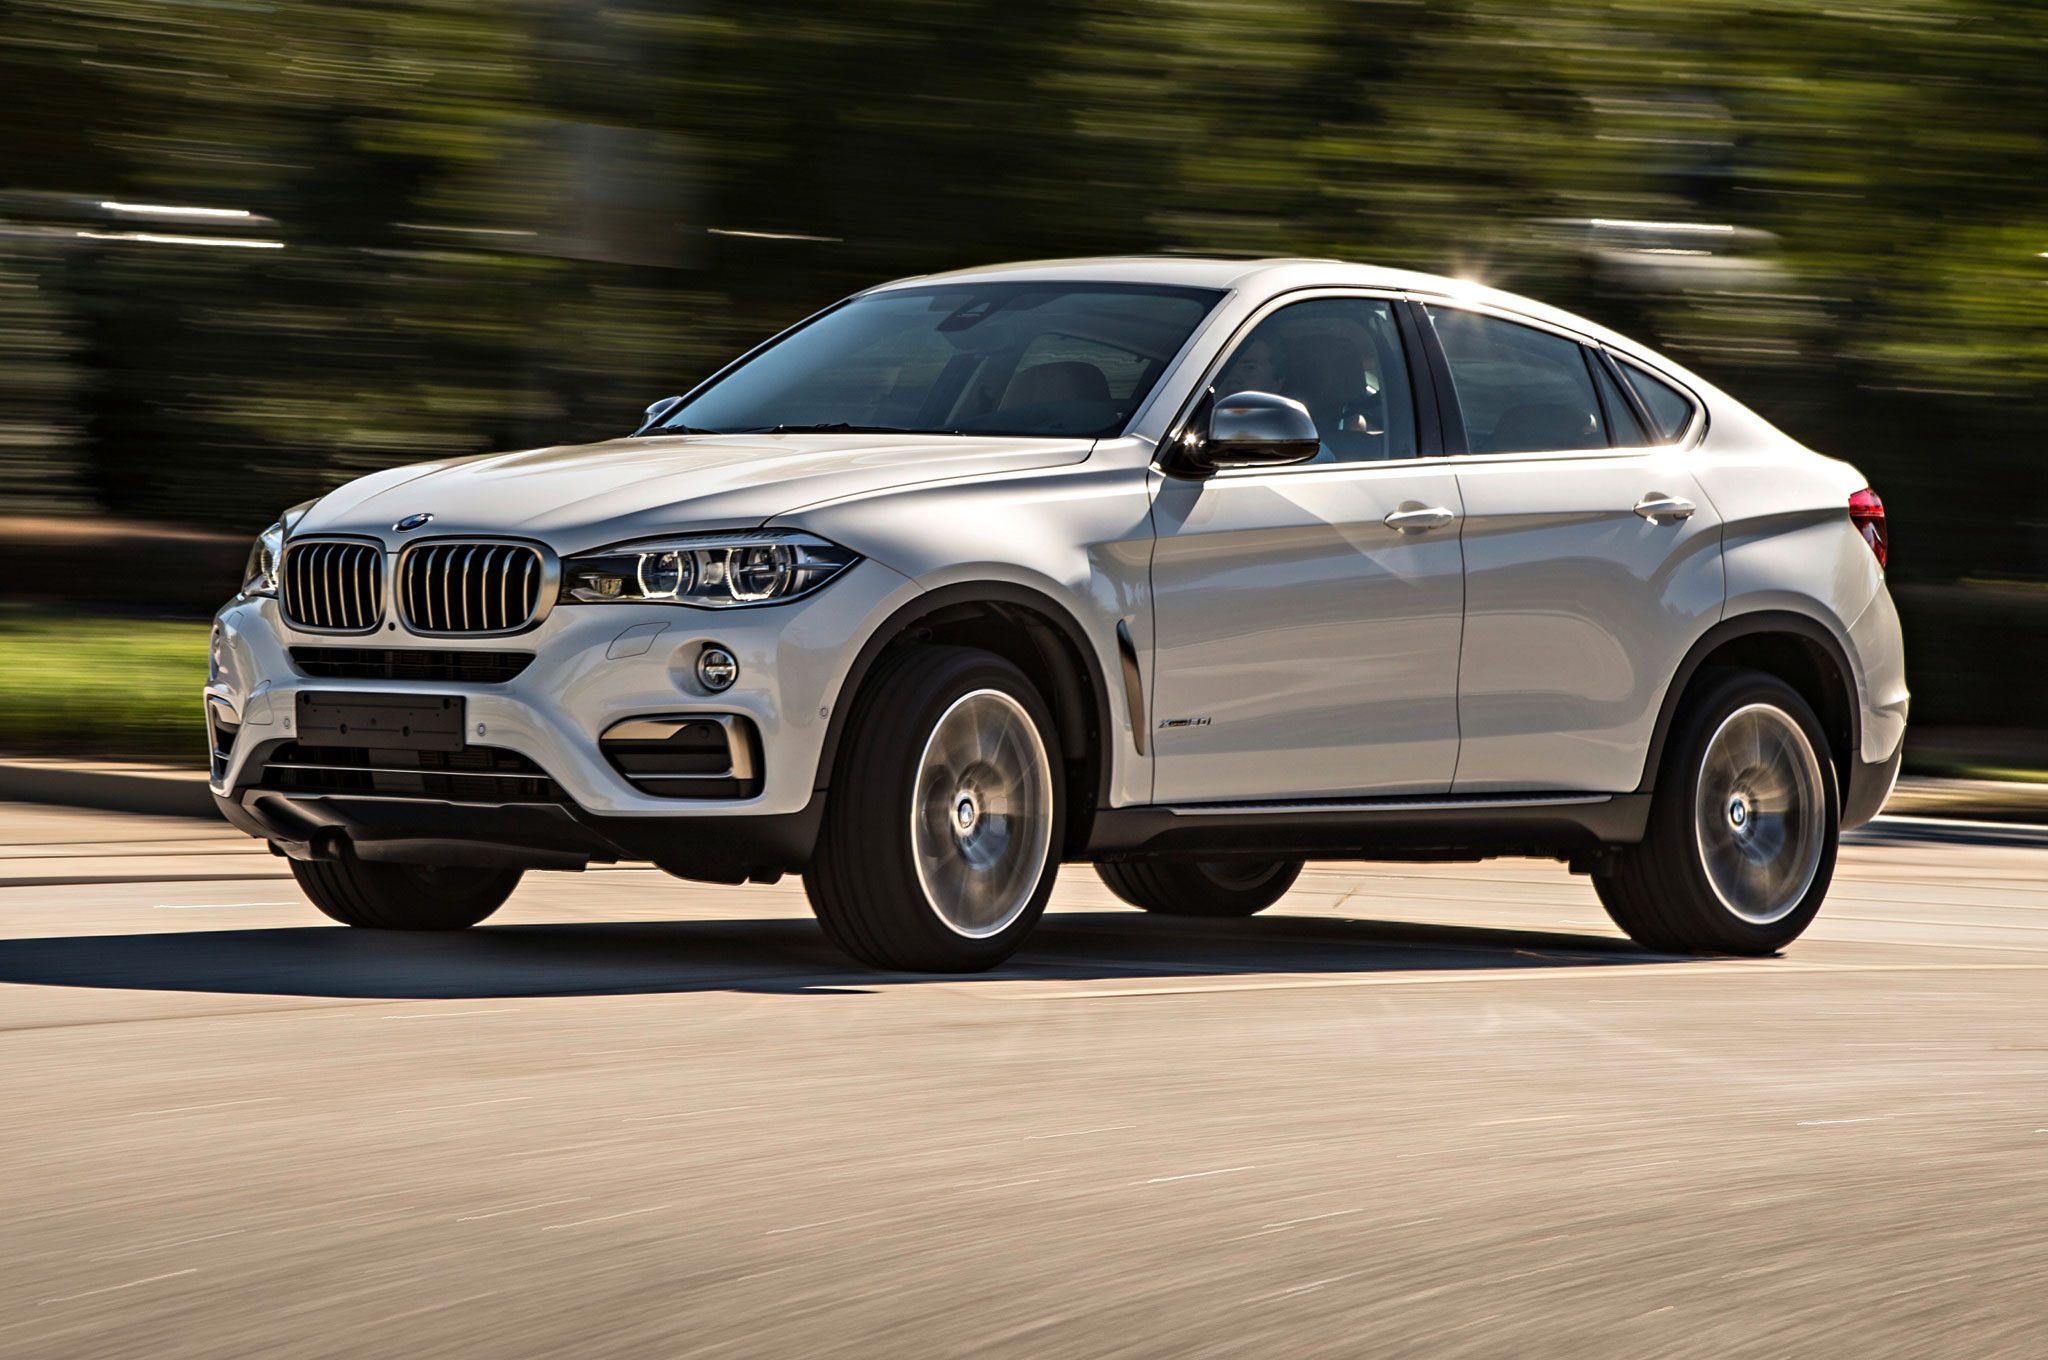 2015-BMW-X6-xDrive50i-front-three-quarter-view-in-motion-12.jpg